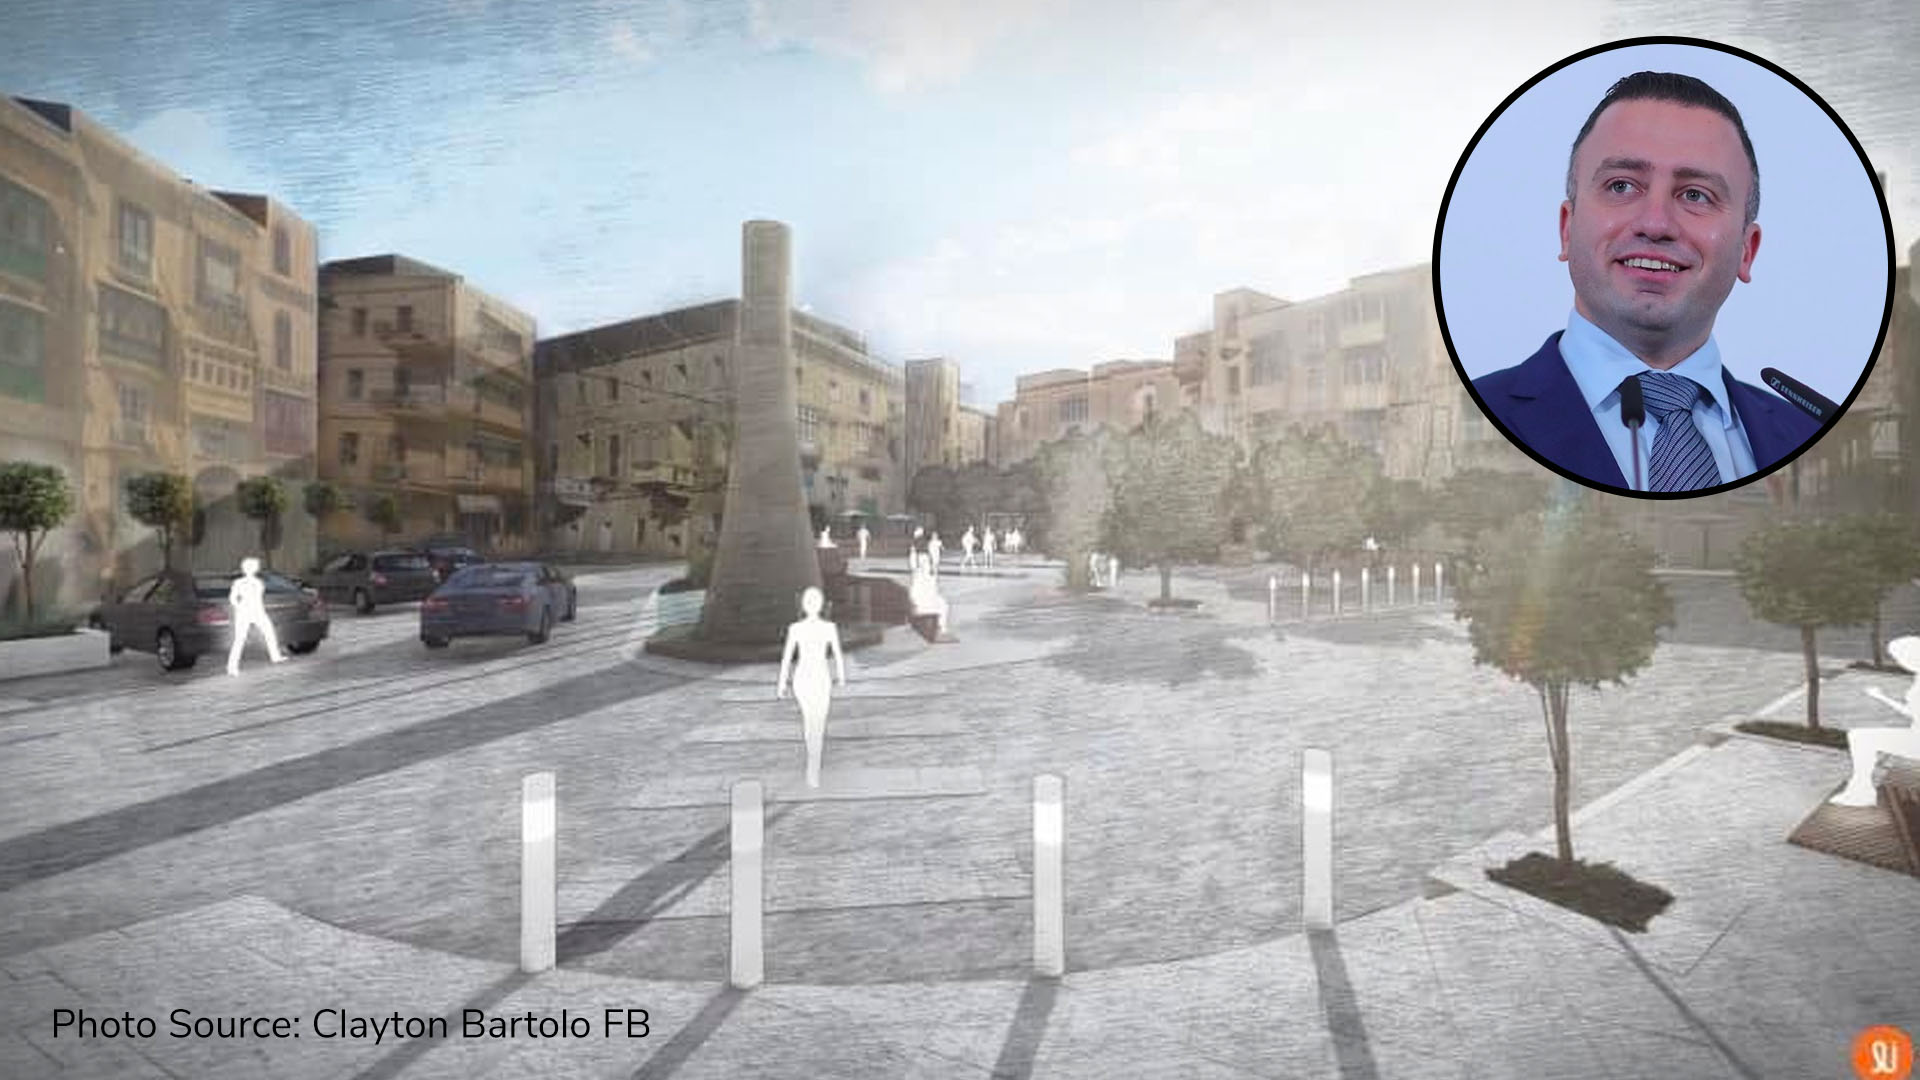 Birgu square’s future vision unveiled by Minister Clayton Bartolo